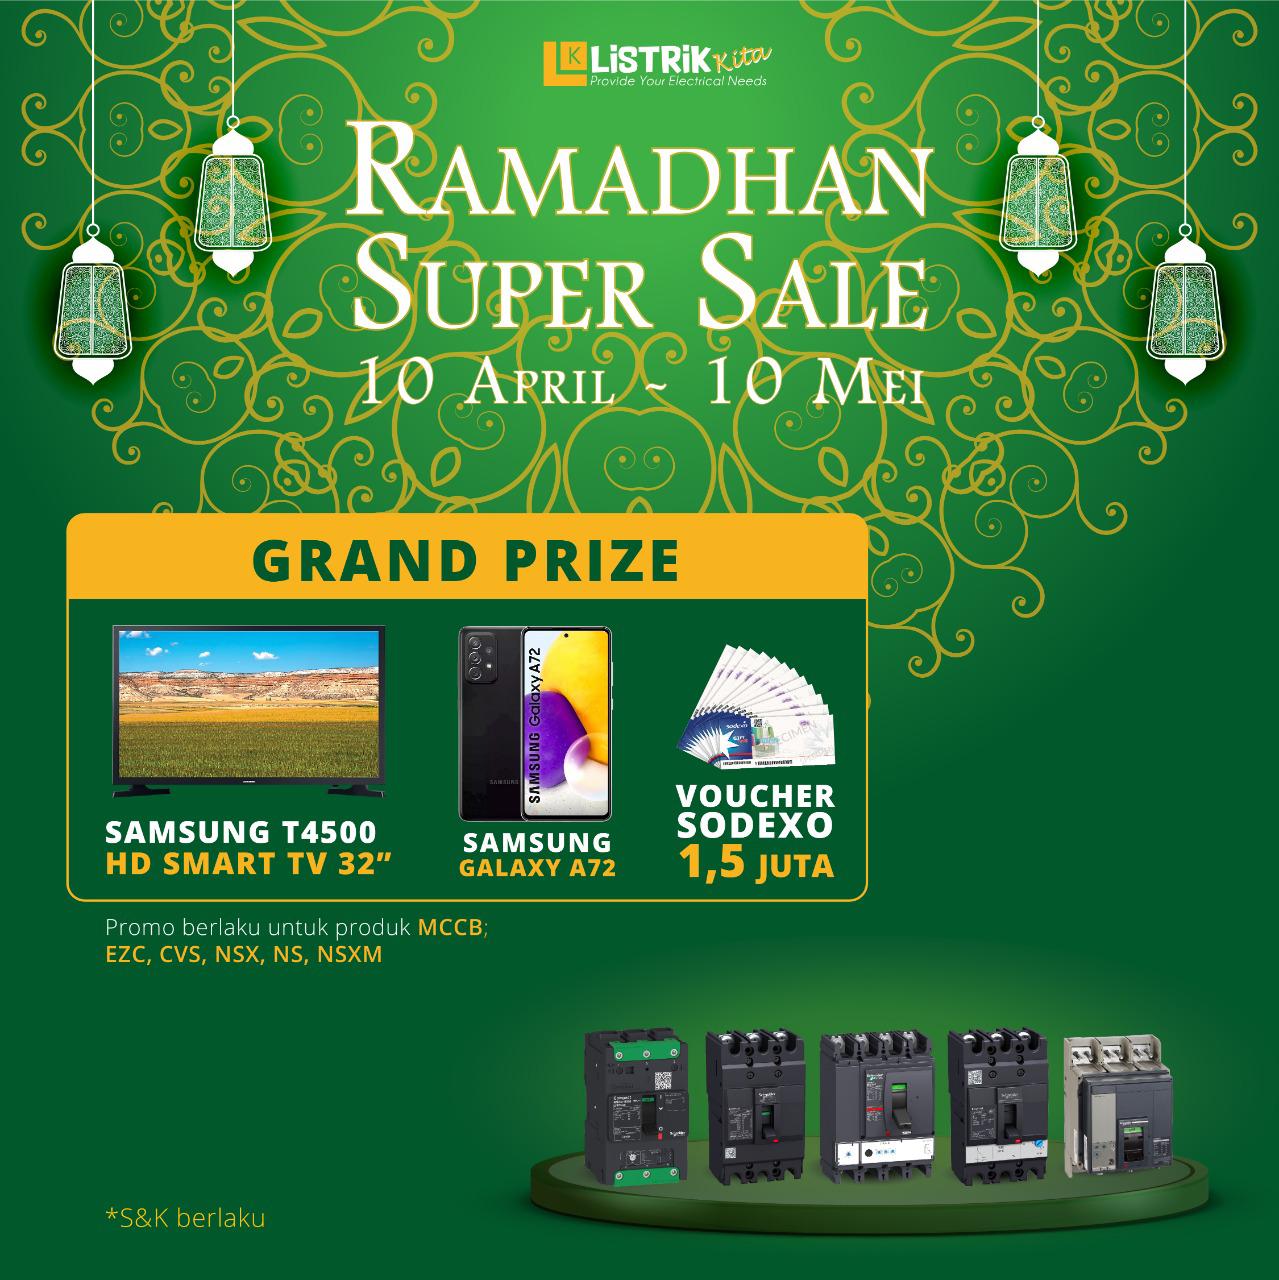 Ramadhan Super Sale